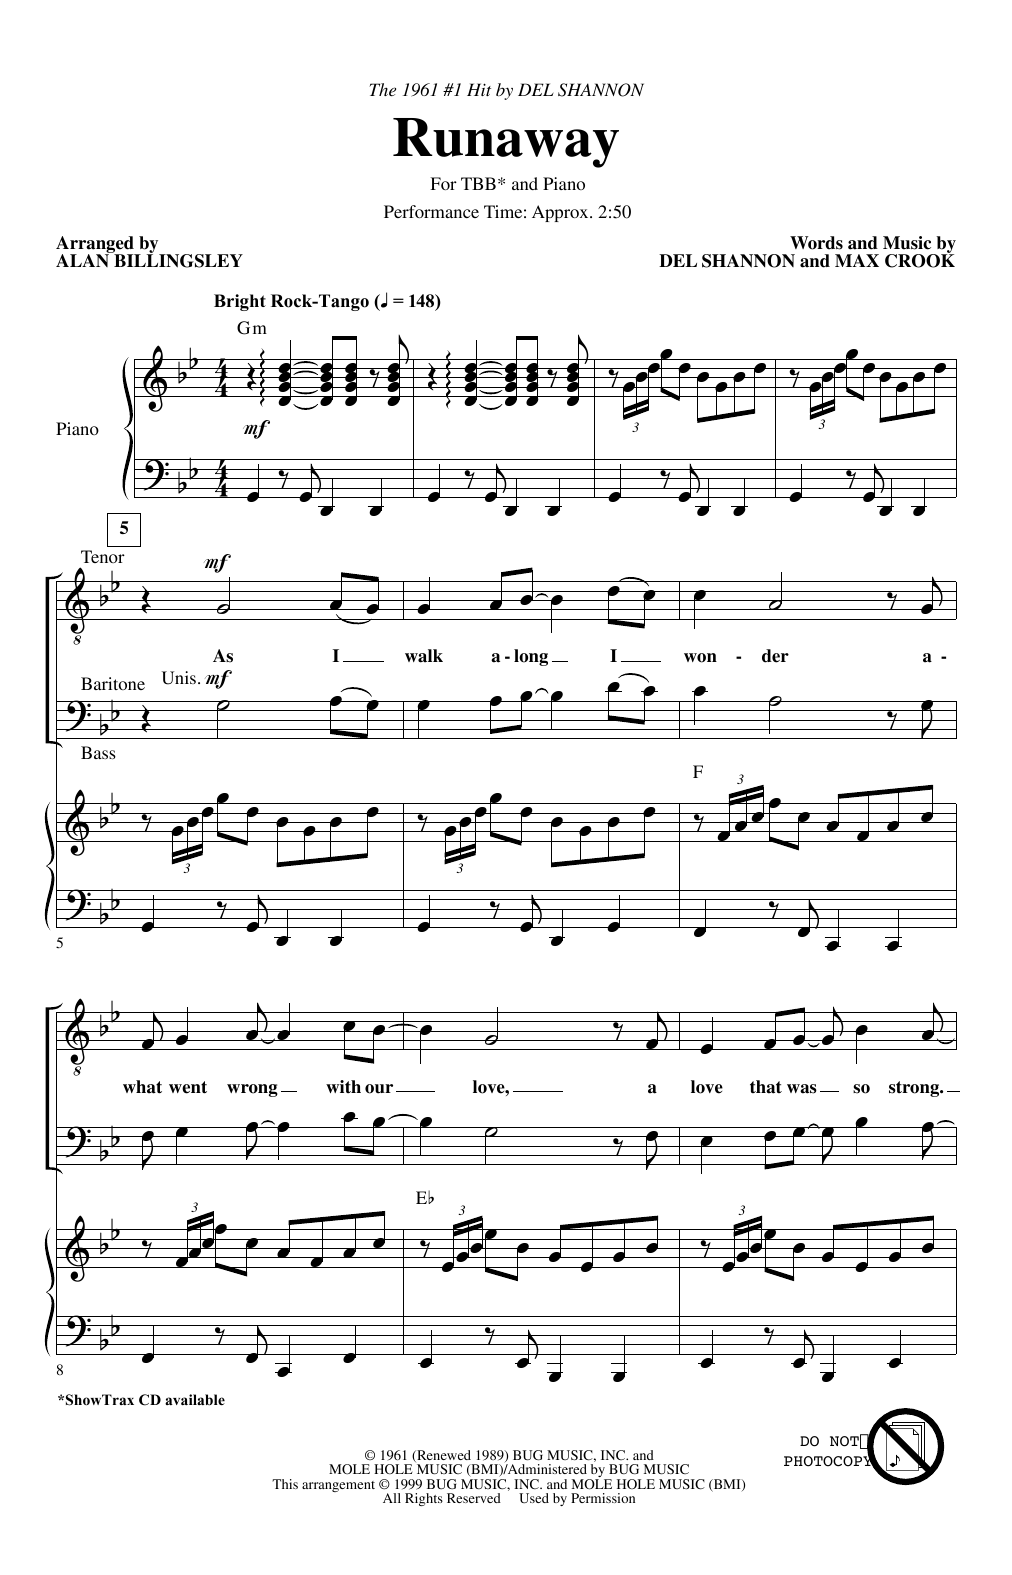 Del Shannon Runaway (arr. Alan Billingsley) Sheet Music Notes & Chords for TBB Choir - Download or Print PDF